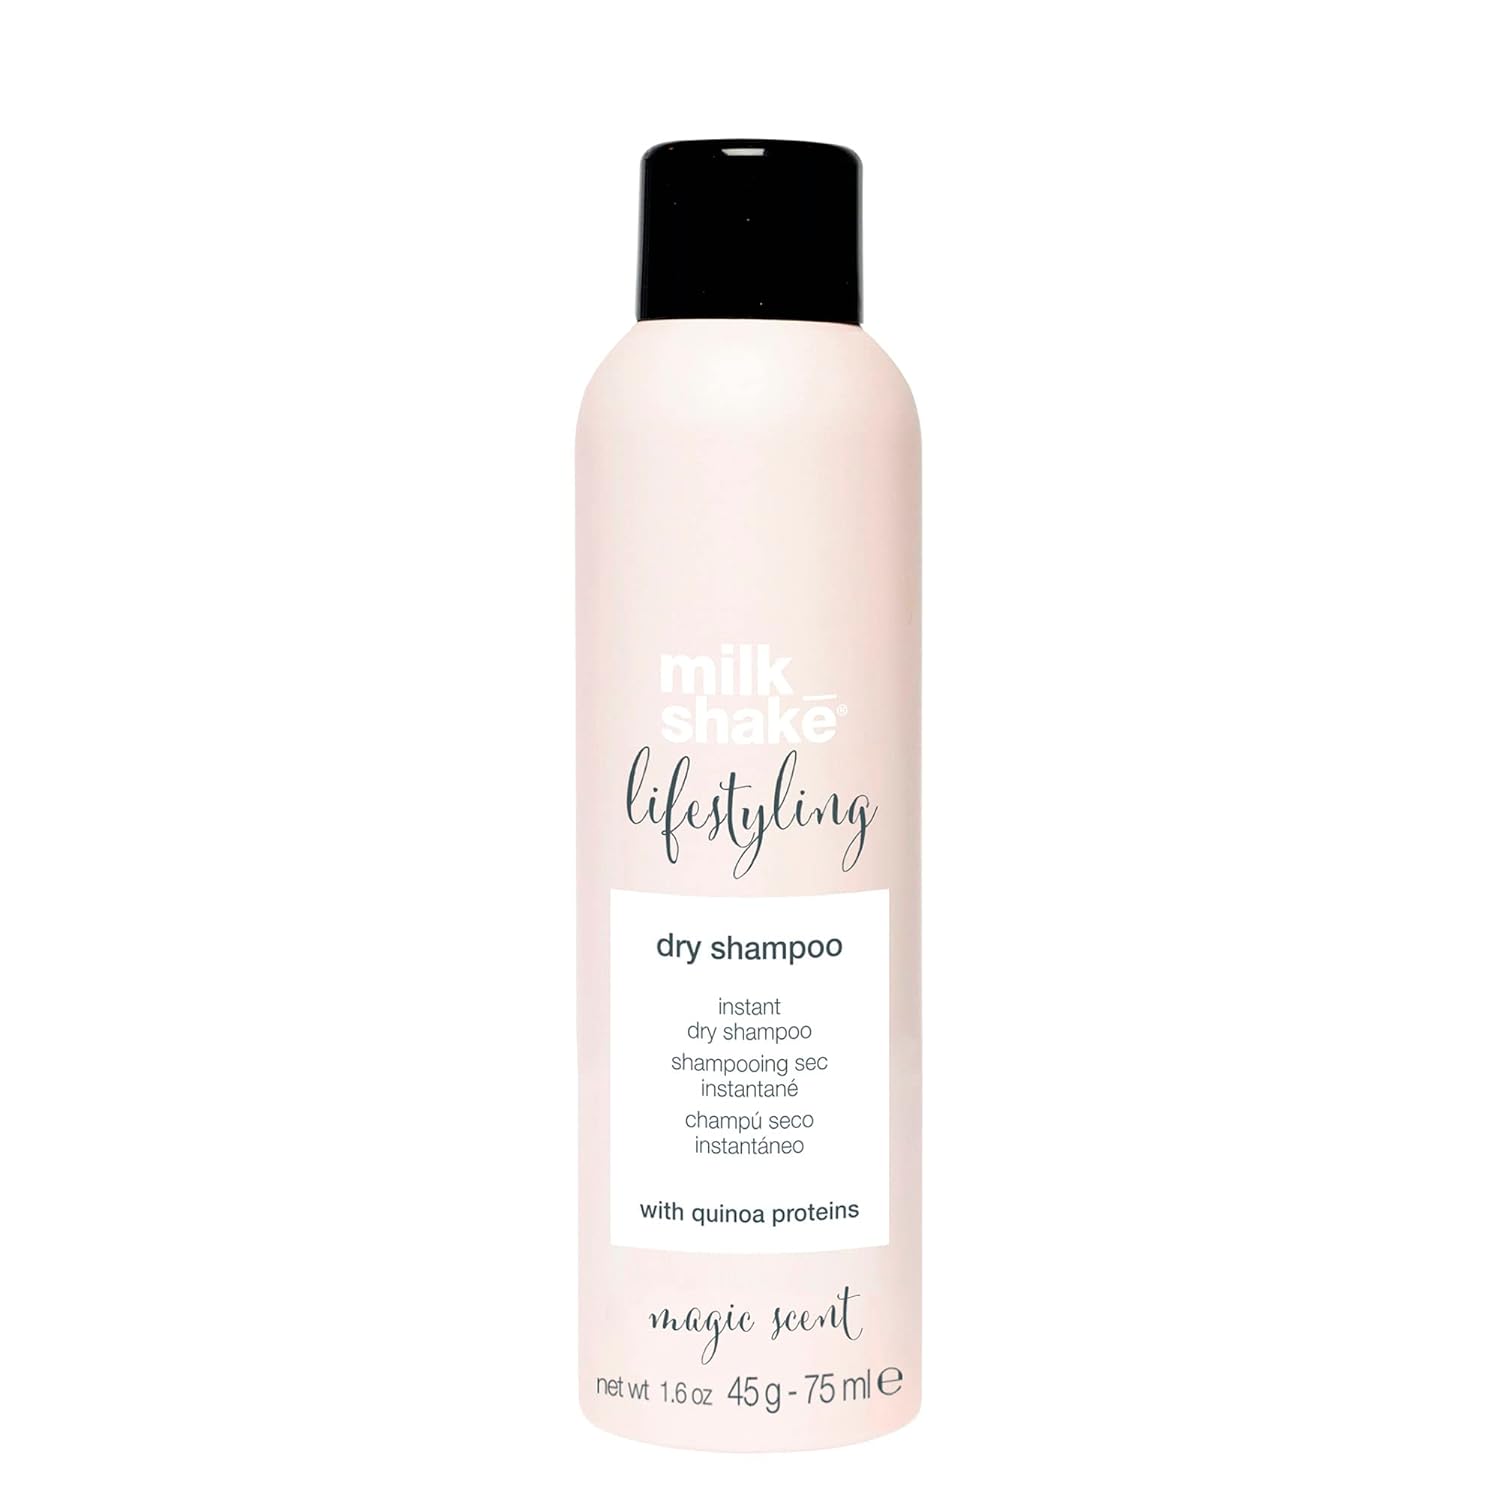 milk_shake Lifestyling Dry Shampoo - Instant Dry Shampoo for Women For Flat, Dry or Oily Hair - 1.6 Fl Oz